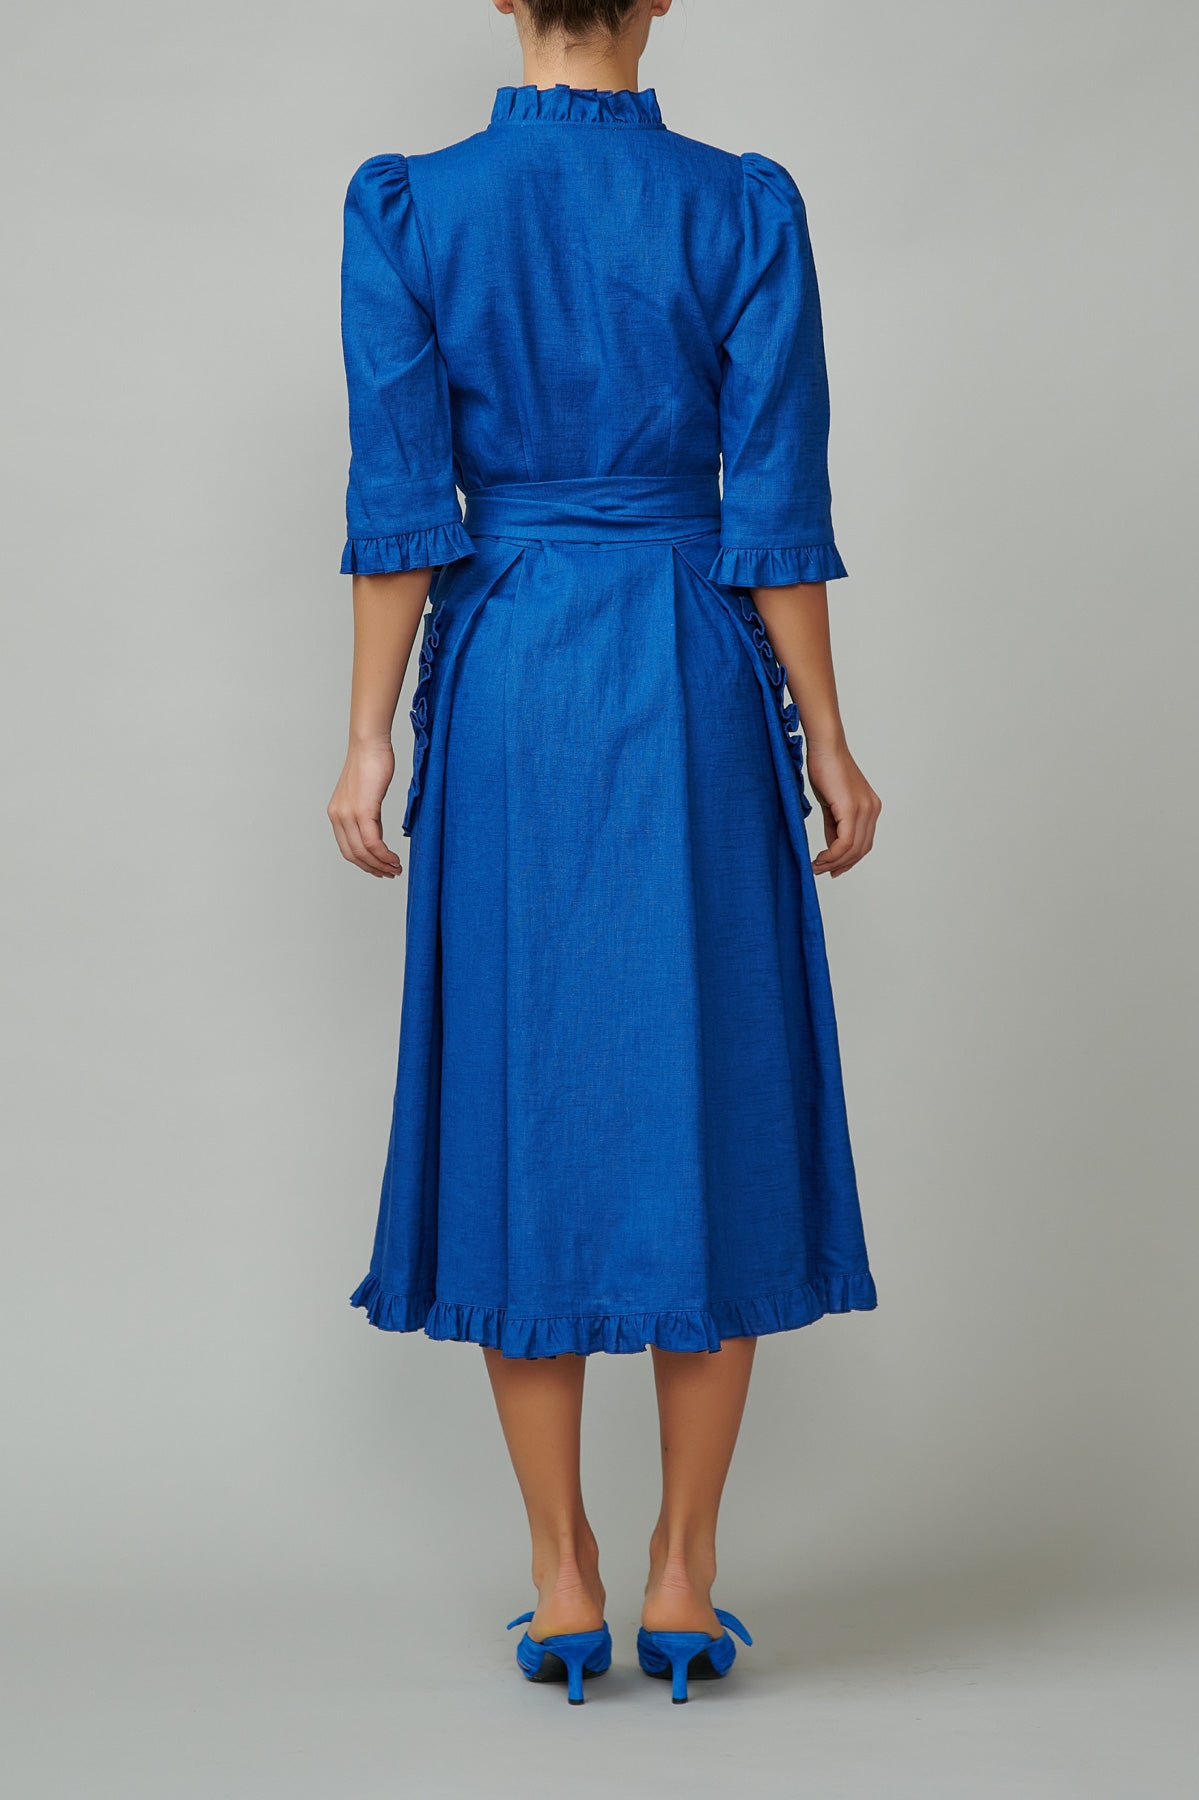 Blue linen shirt dress with applied pockets and ruffles